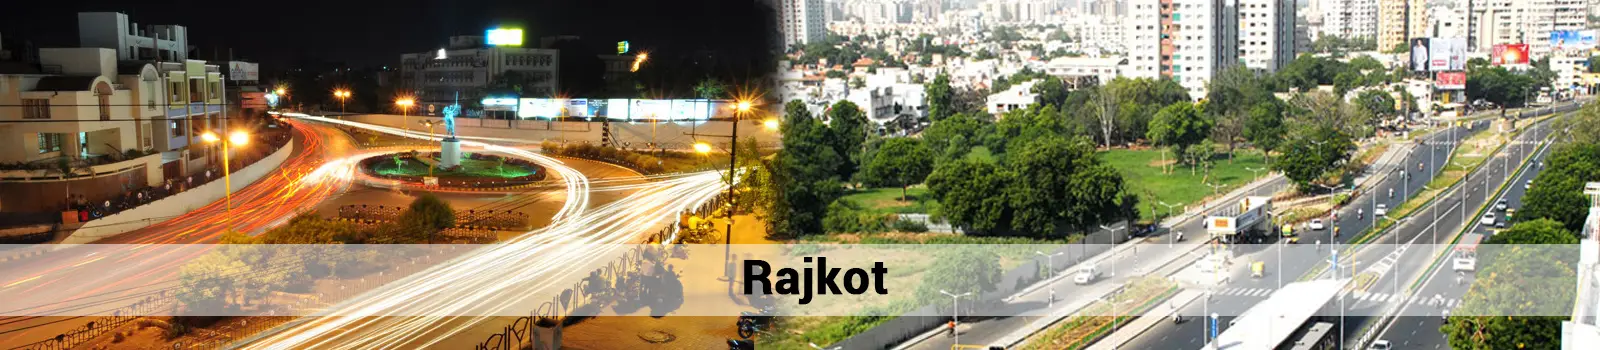 advertising agency in rajkot for clients on Billboards, Hoardings in Rajkot